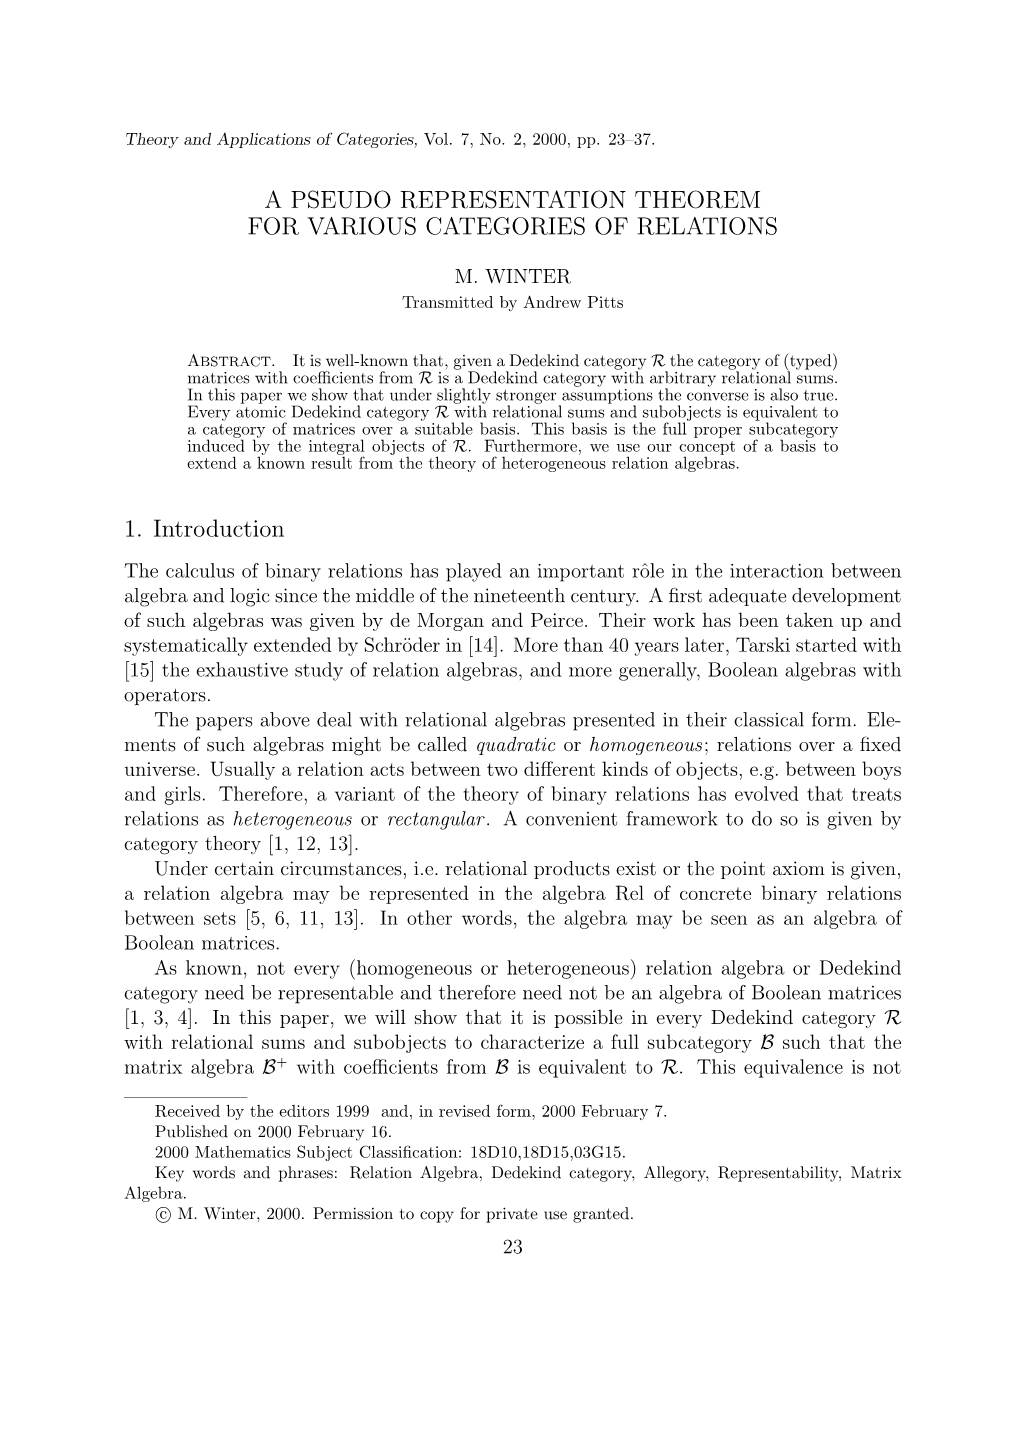 A Pseudo Representation Theorem for Various Categories of Relations